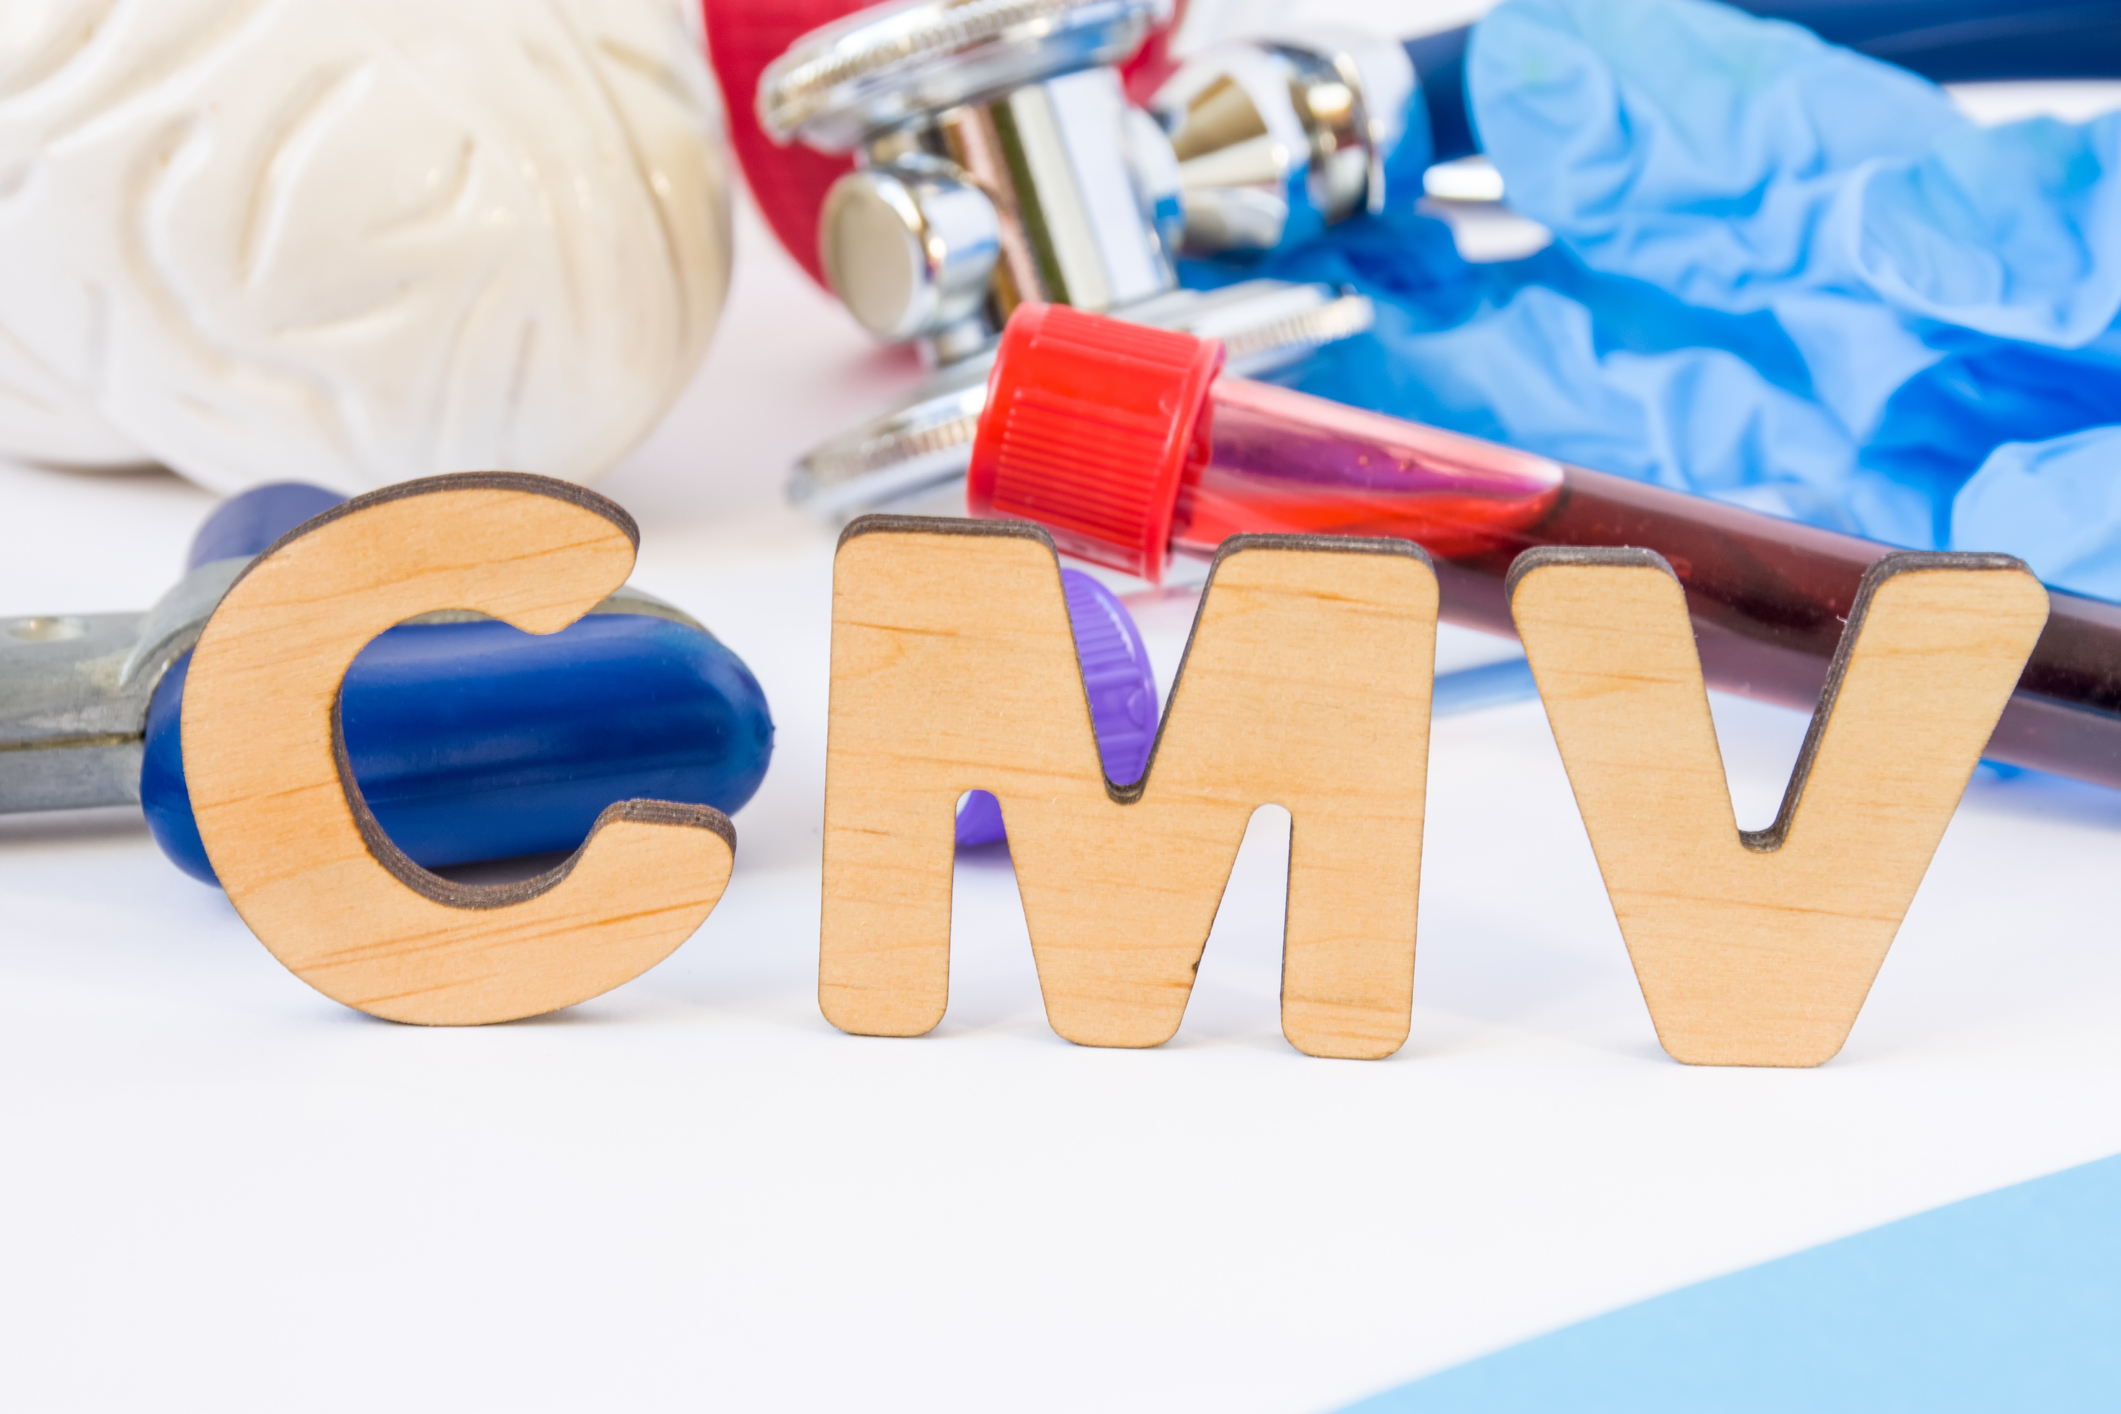 CMV stands for cytomegalovirus.